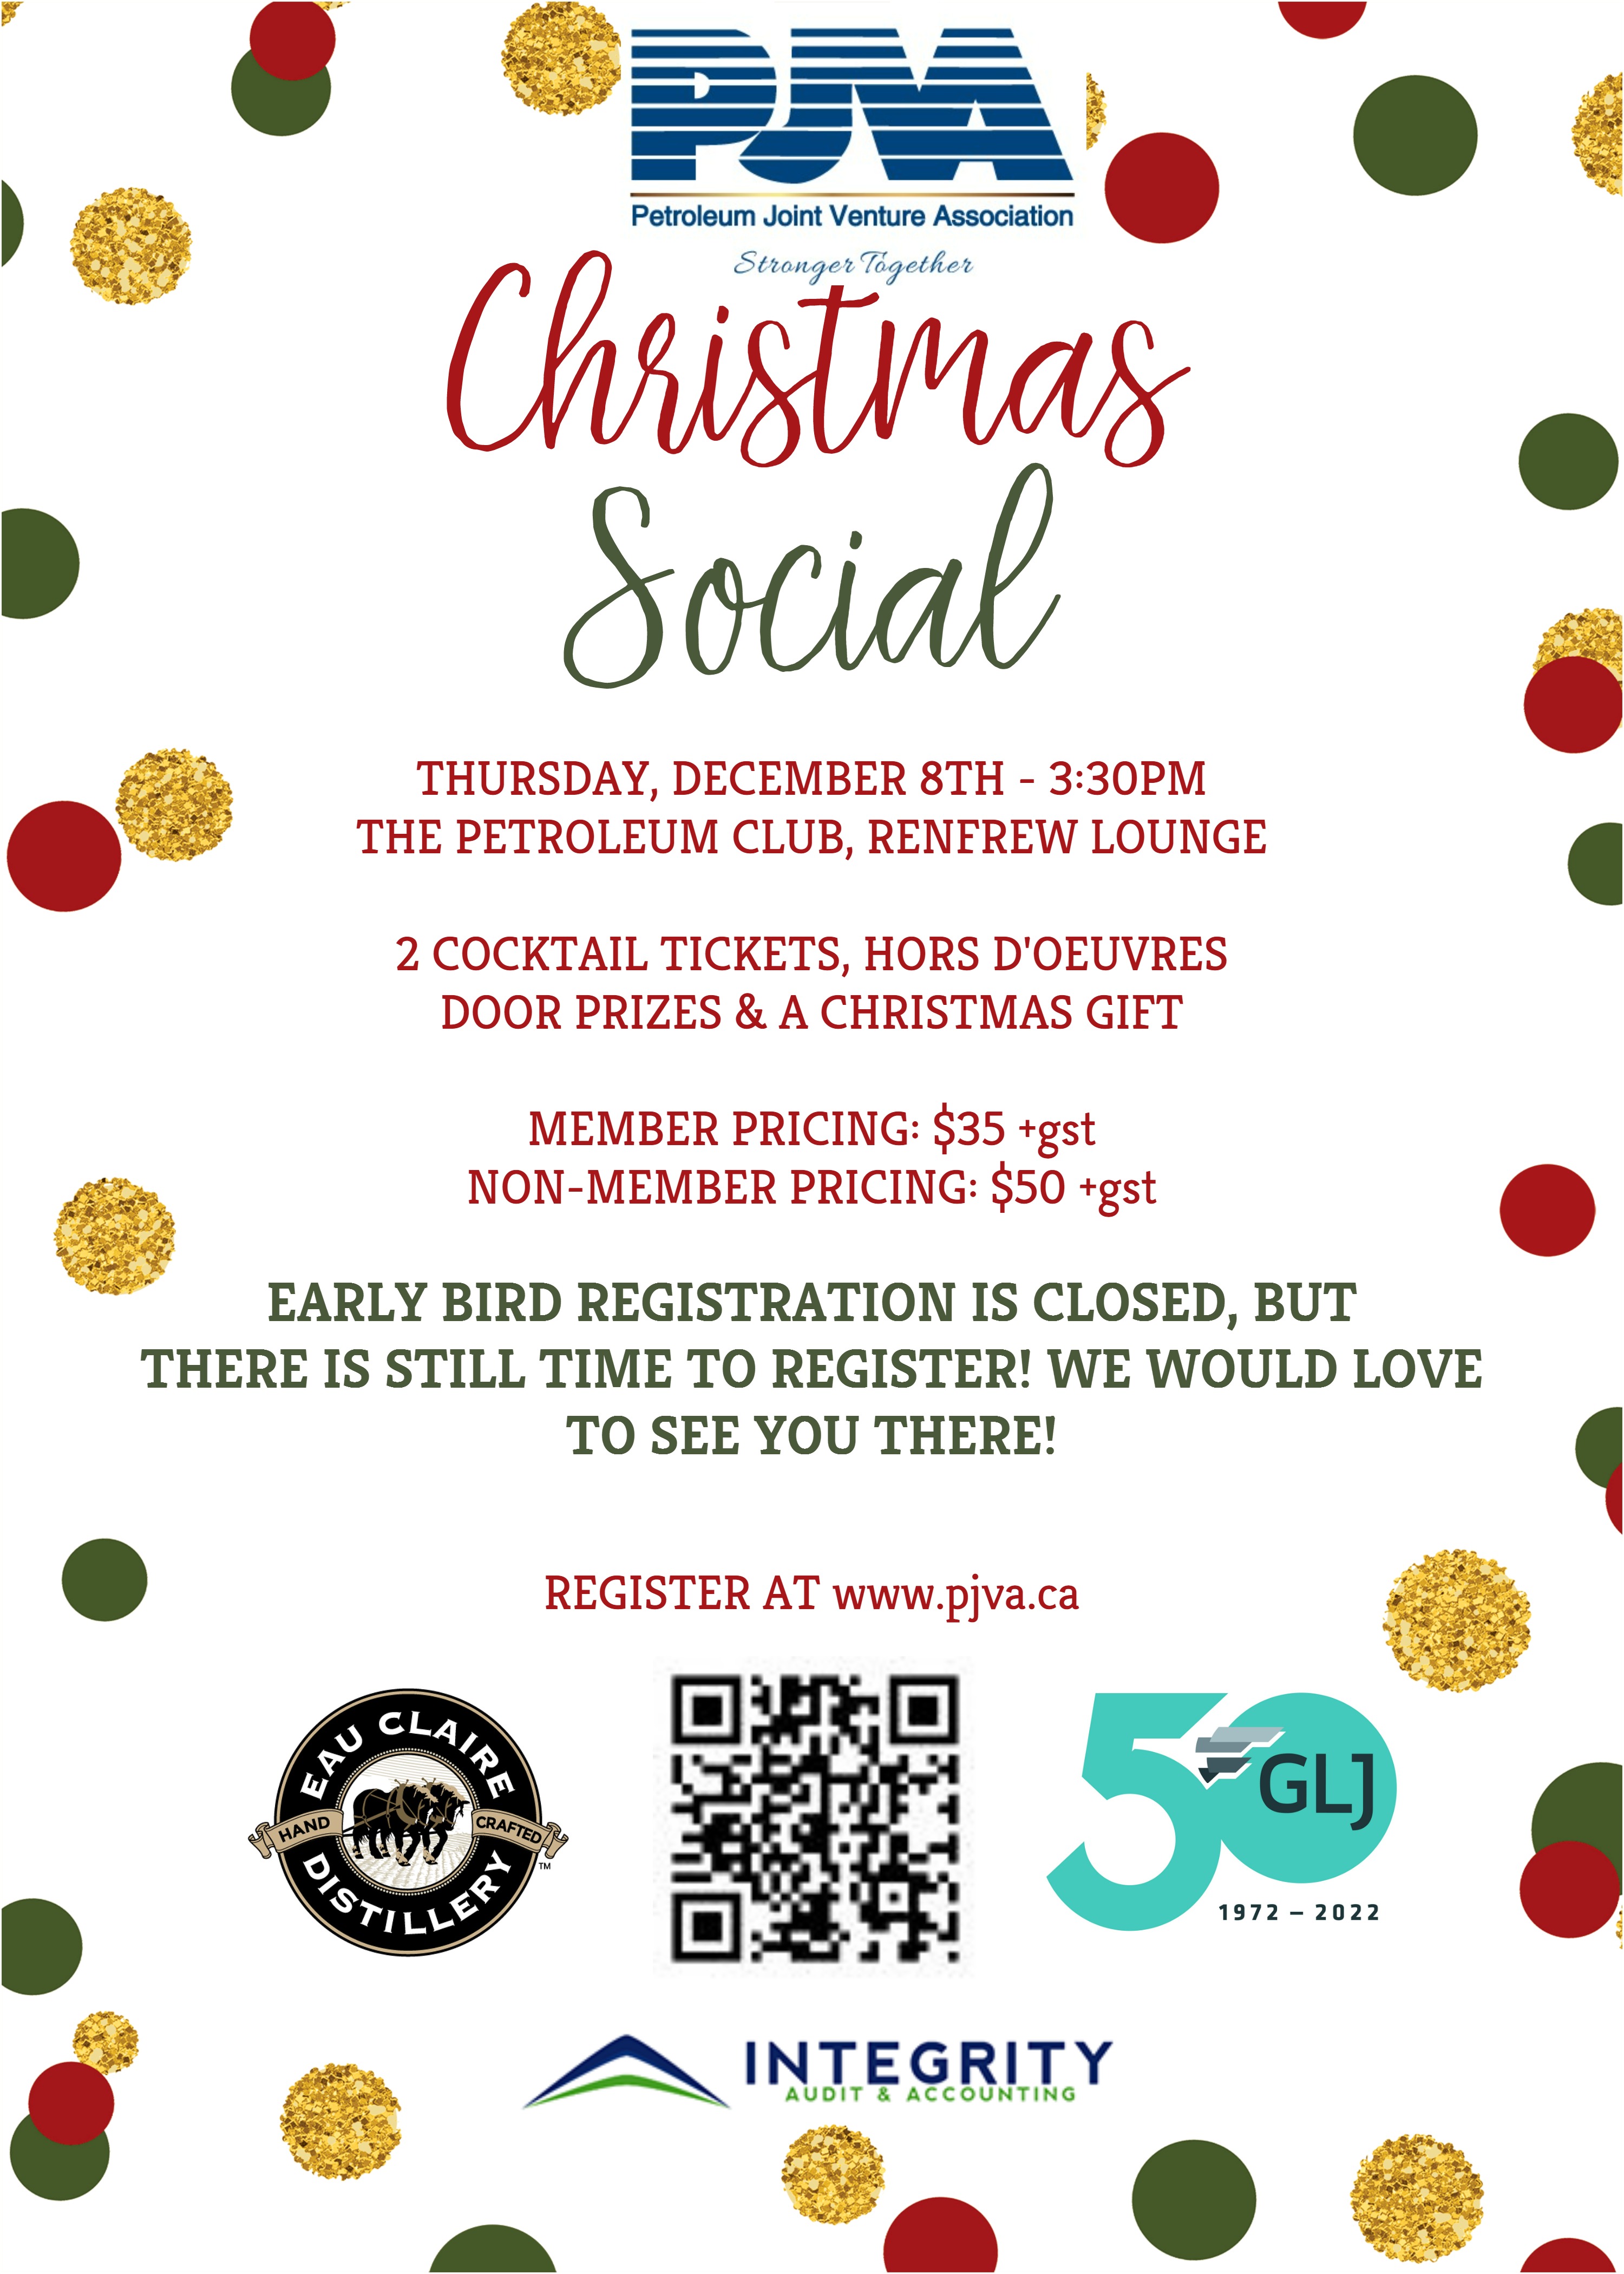 2022 Christmas Social Invitation Image